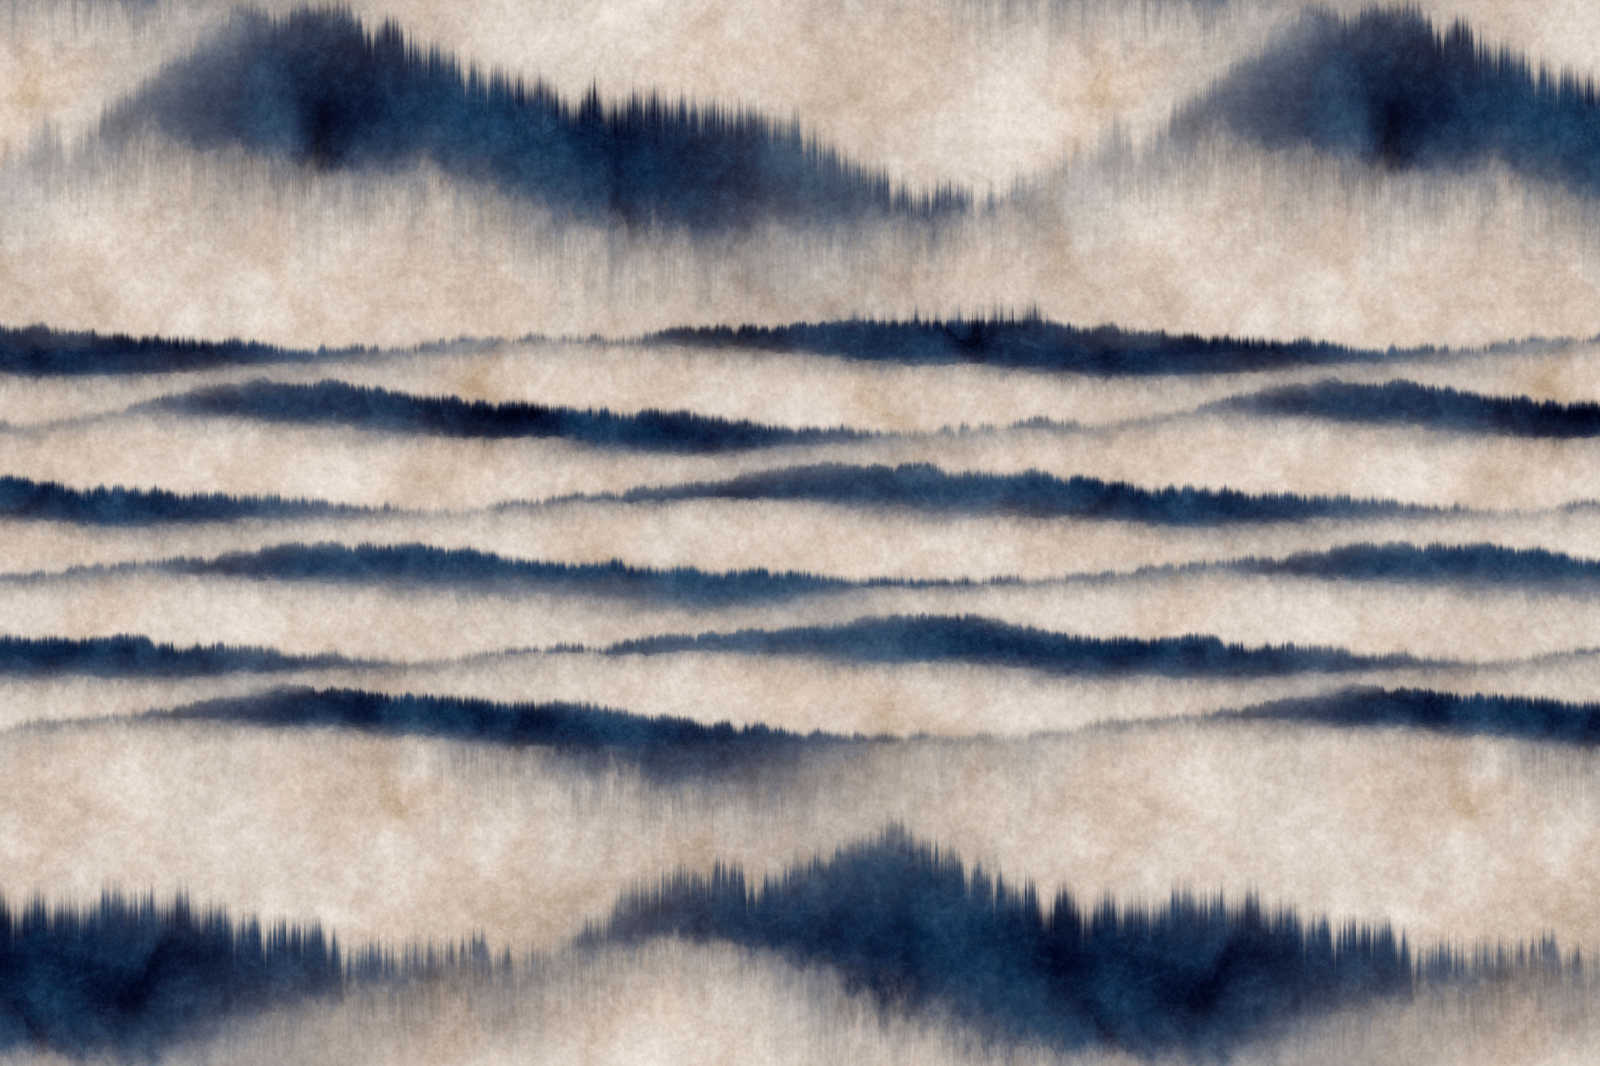             Cuadro abstracto ondas | azul, blanco - 0,90 m x 0,60 m
        